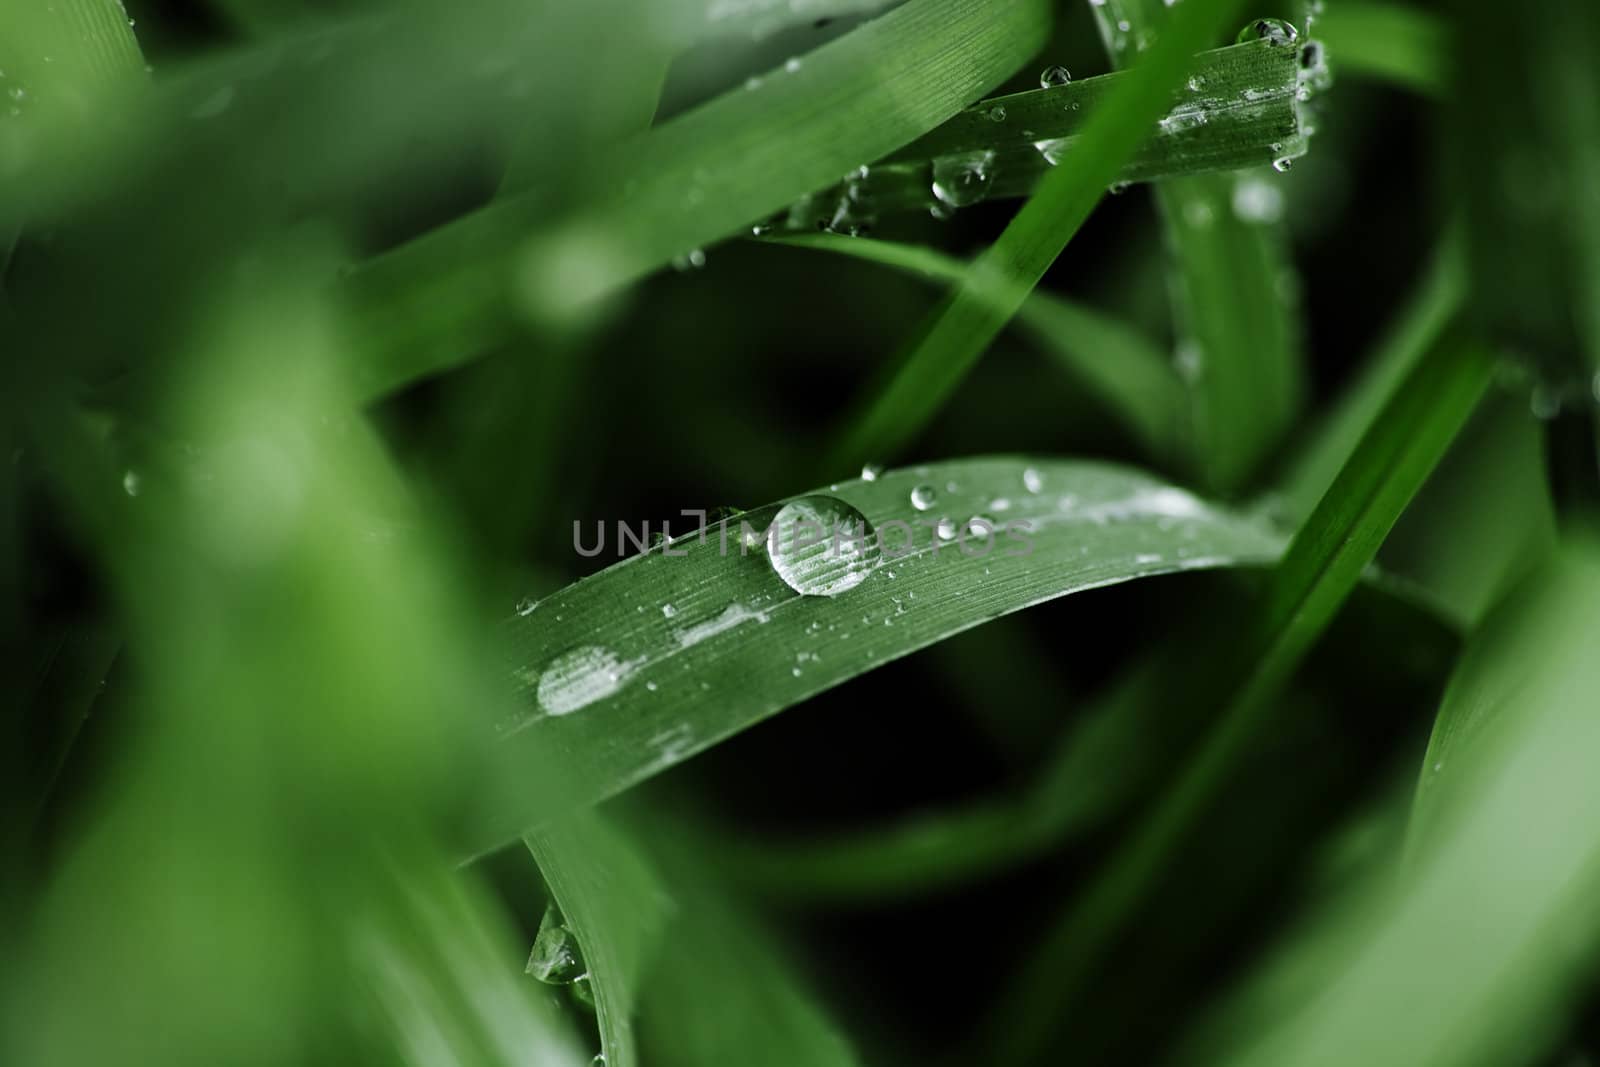 Rain drops on green blades of grass